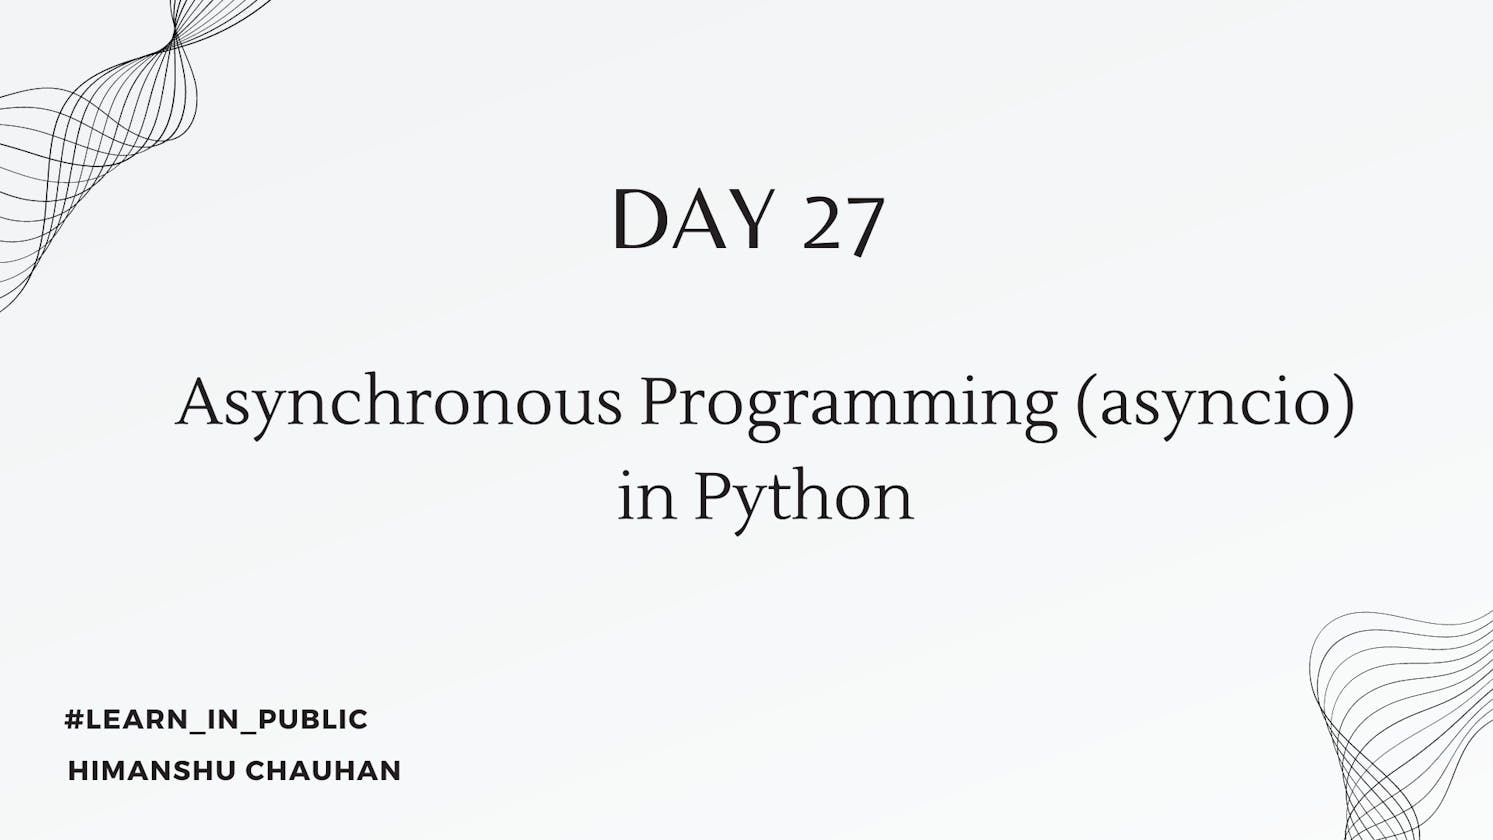 Day 27: Asynchronous Programming (asyncio) in Python